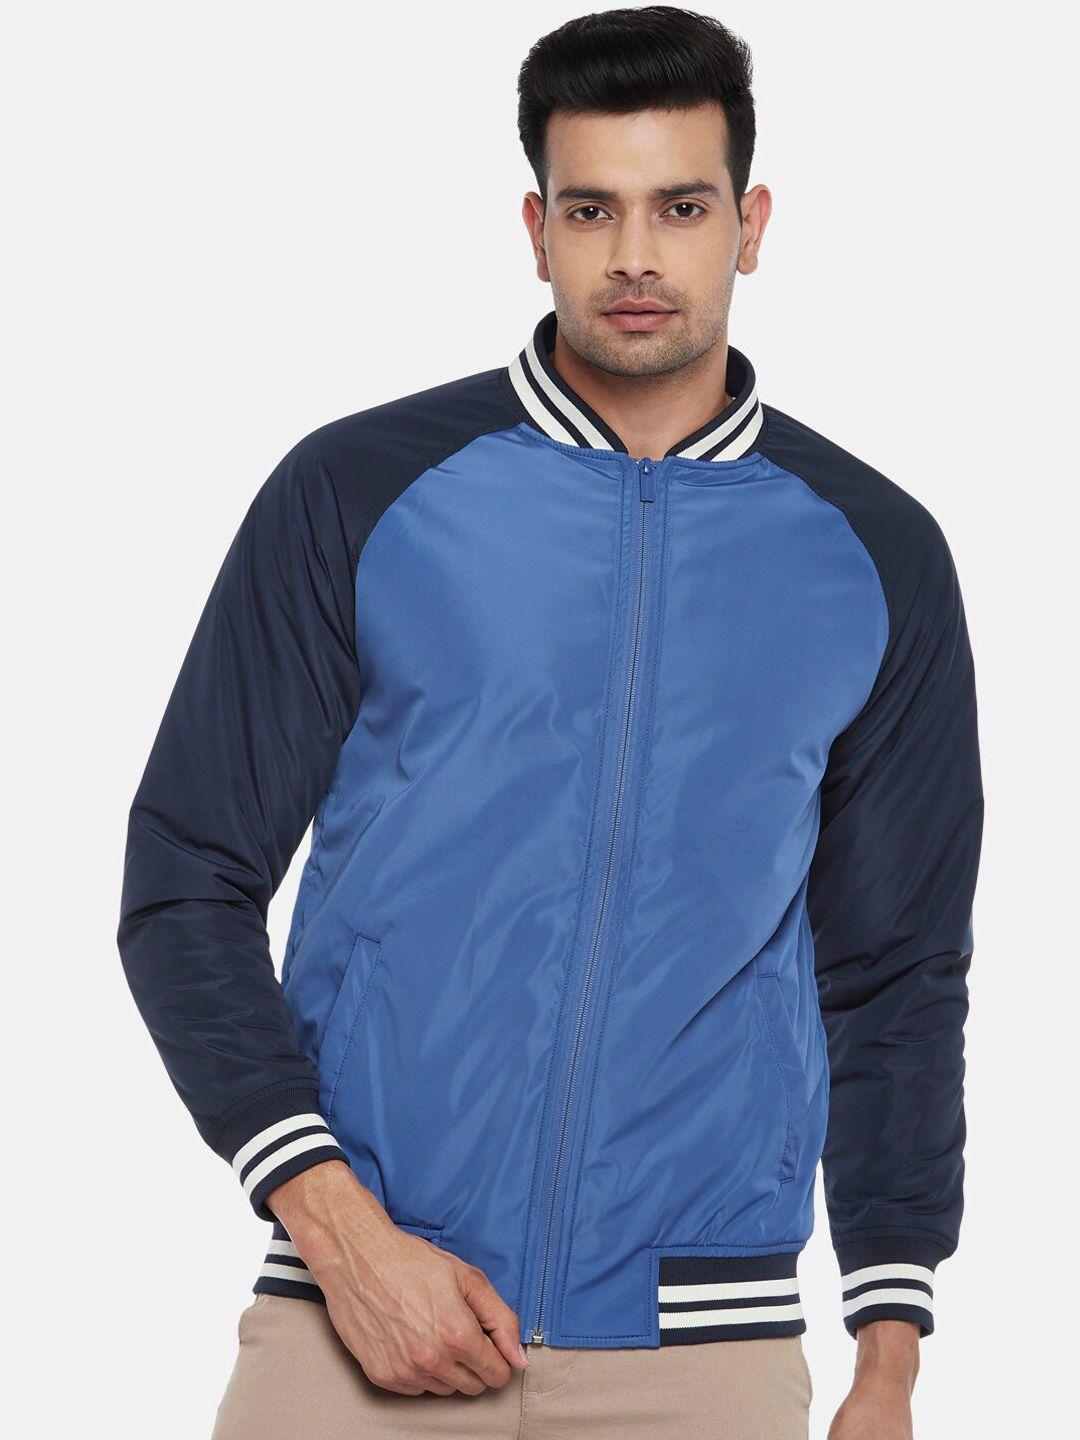 byford-by-pantaloons-men-blue-colourblocked-bomber-jacket